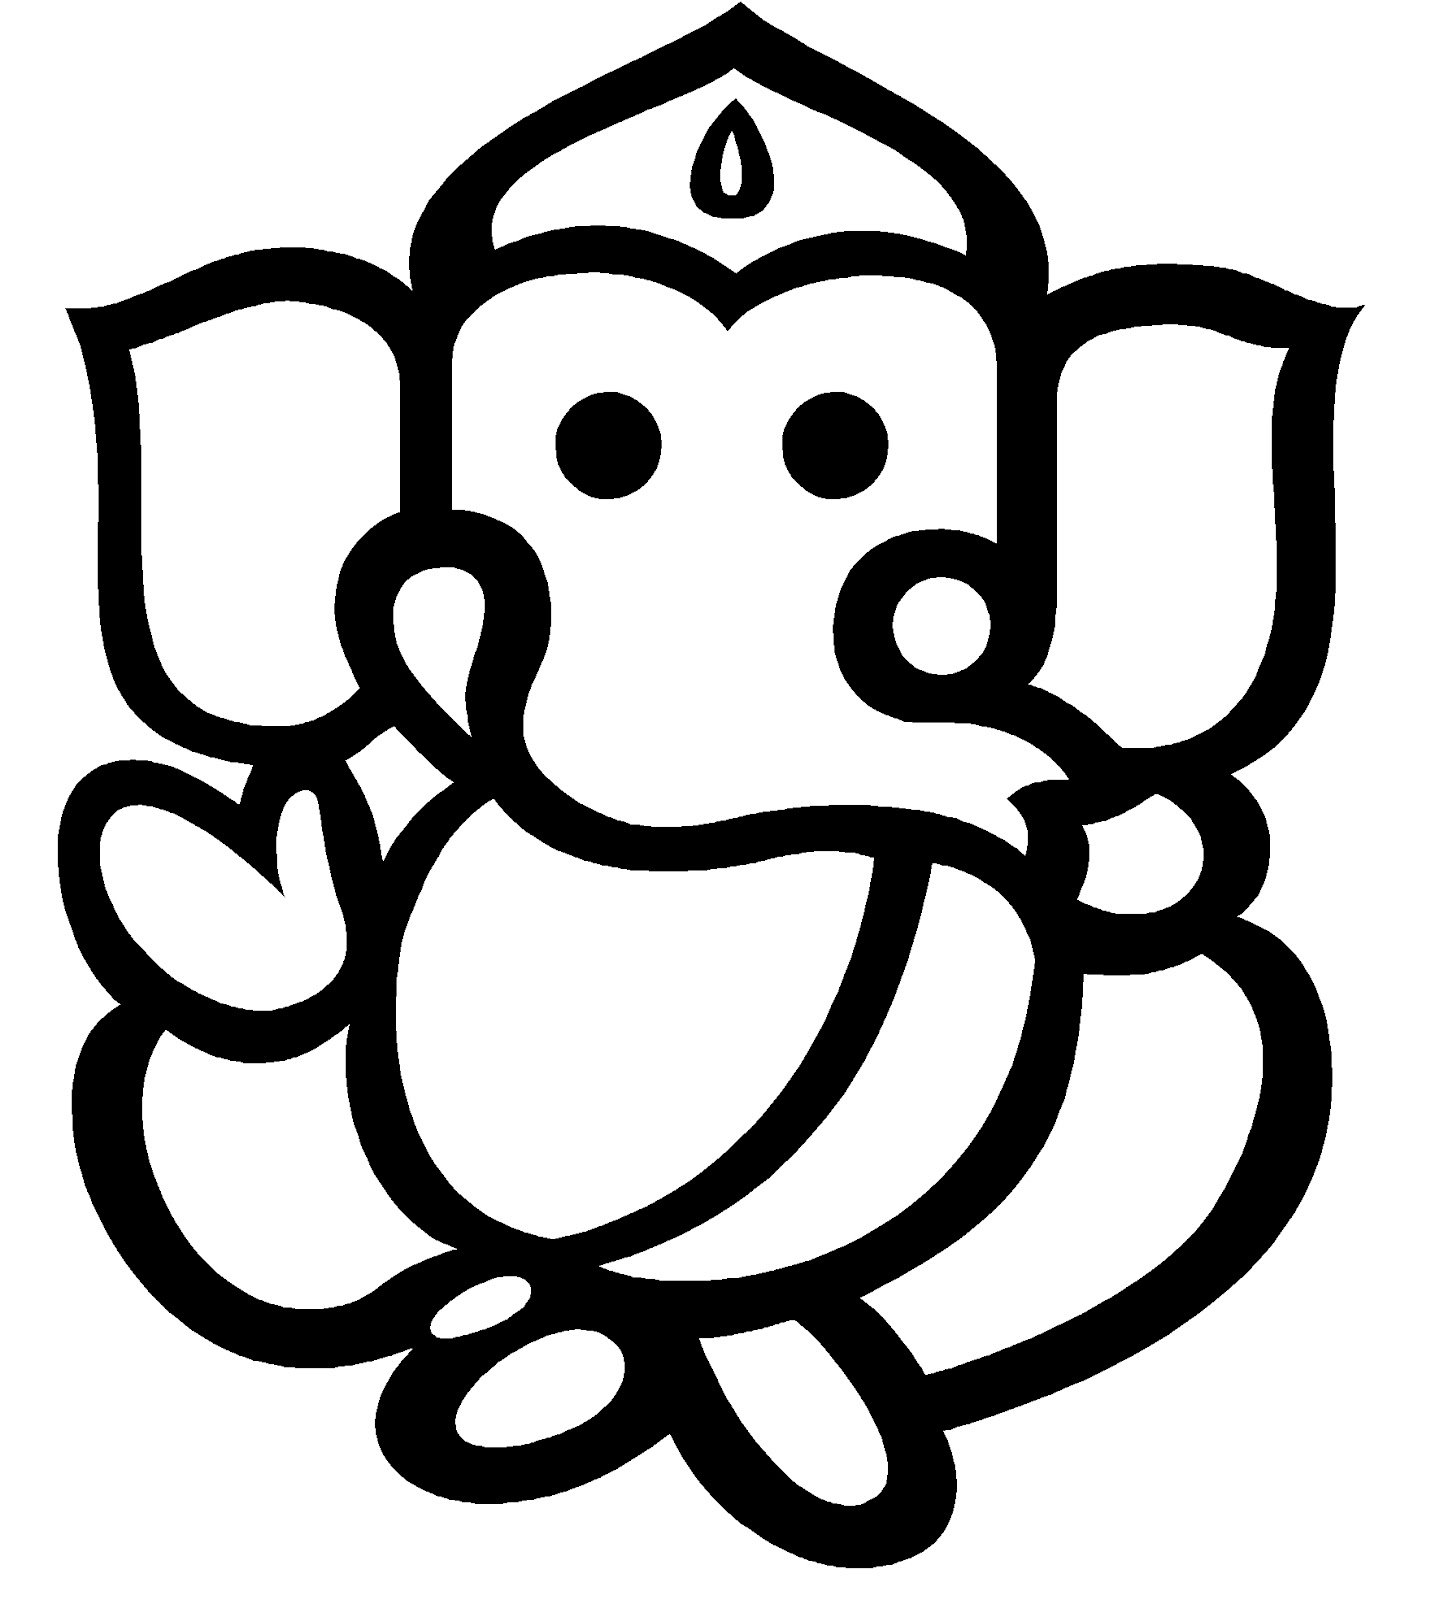 Free Ganesh Cliparts, Download Free Ganesh Cliparts png images, Free